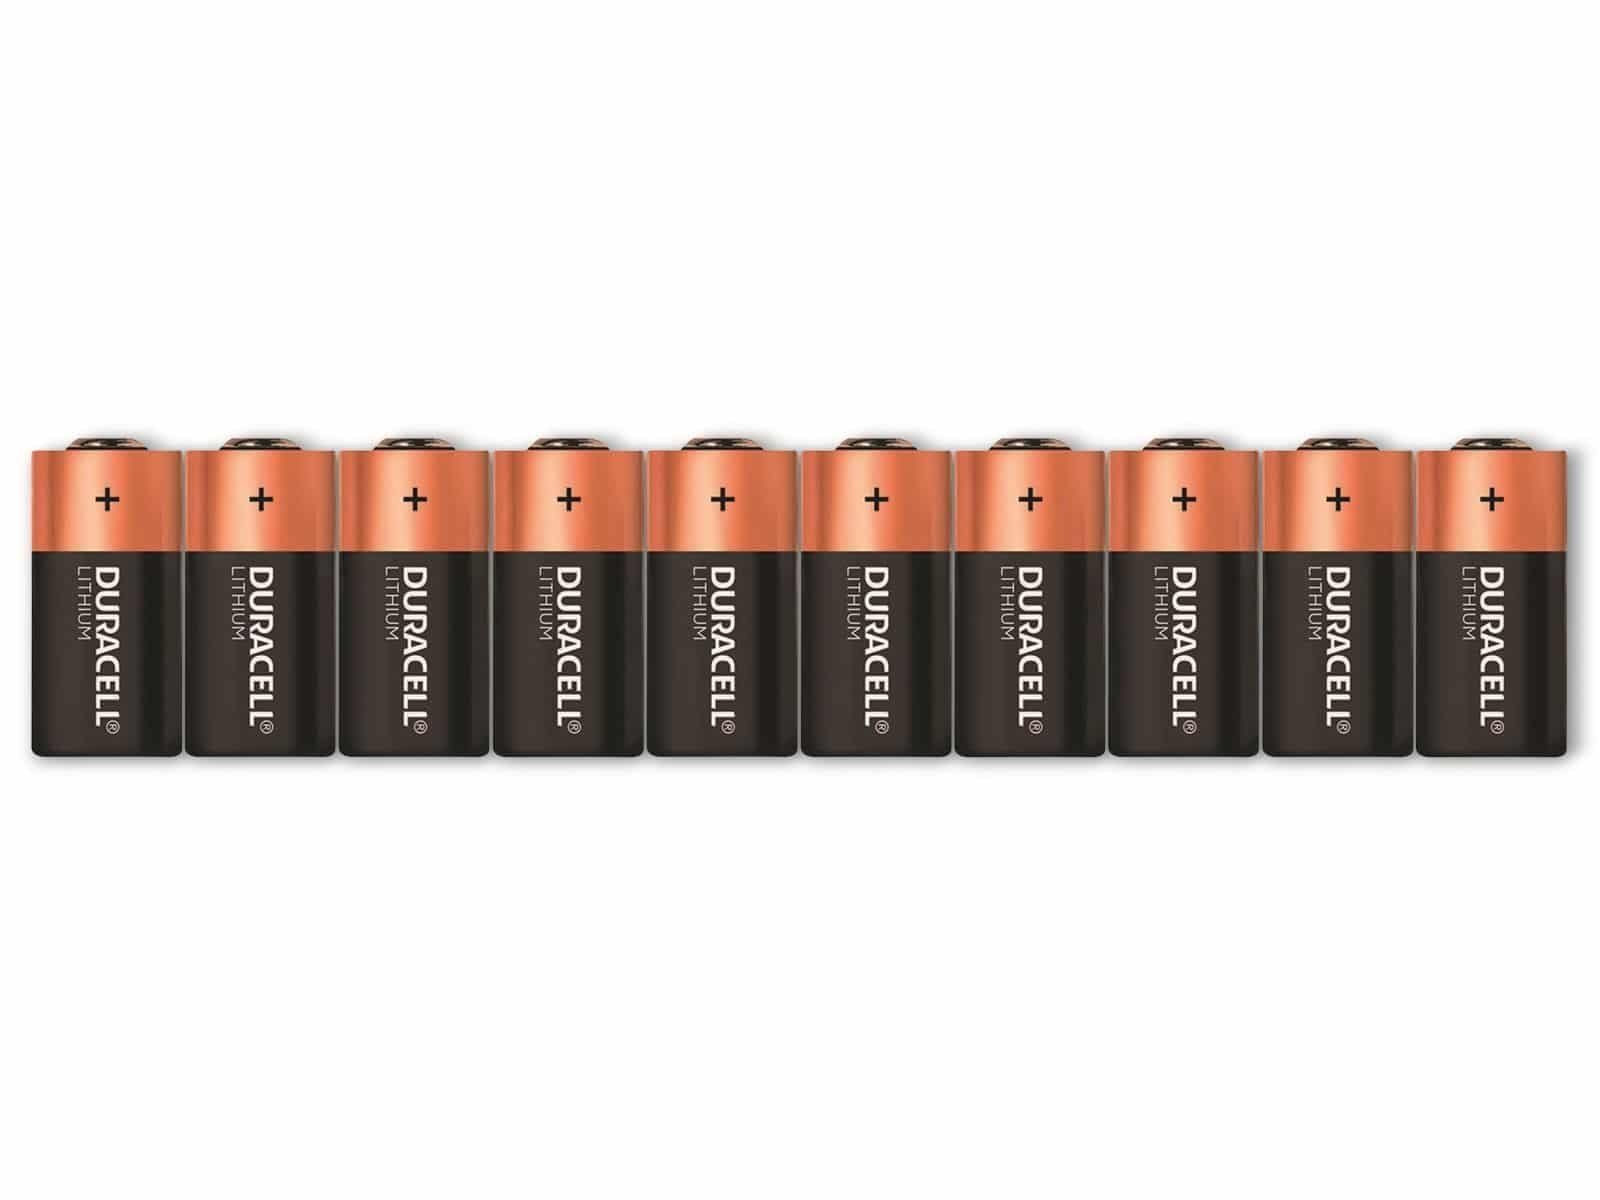 Duracell DURACELL Lithium-Batterie, Lithium, CR123A, 10 Batterie